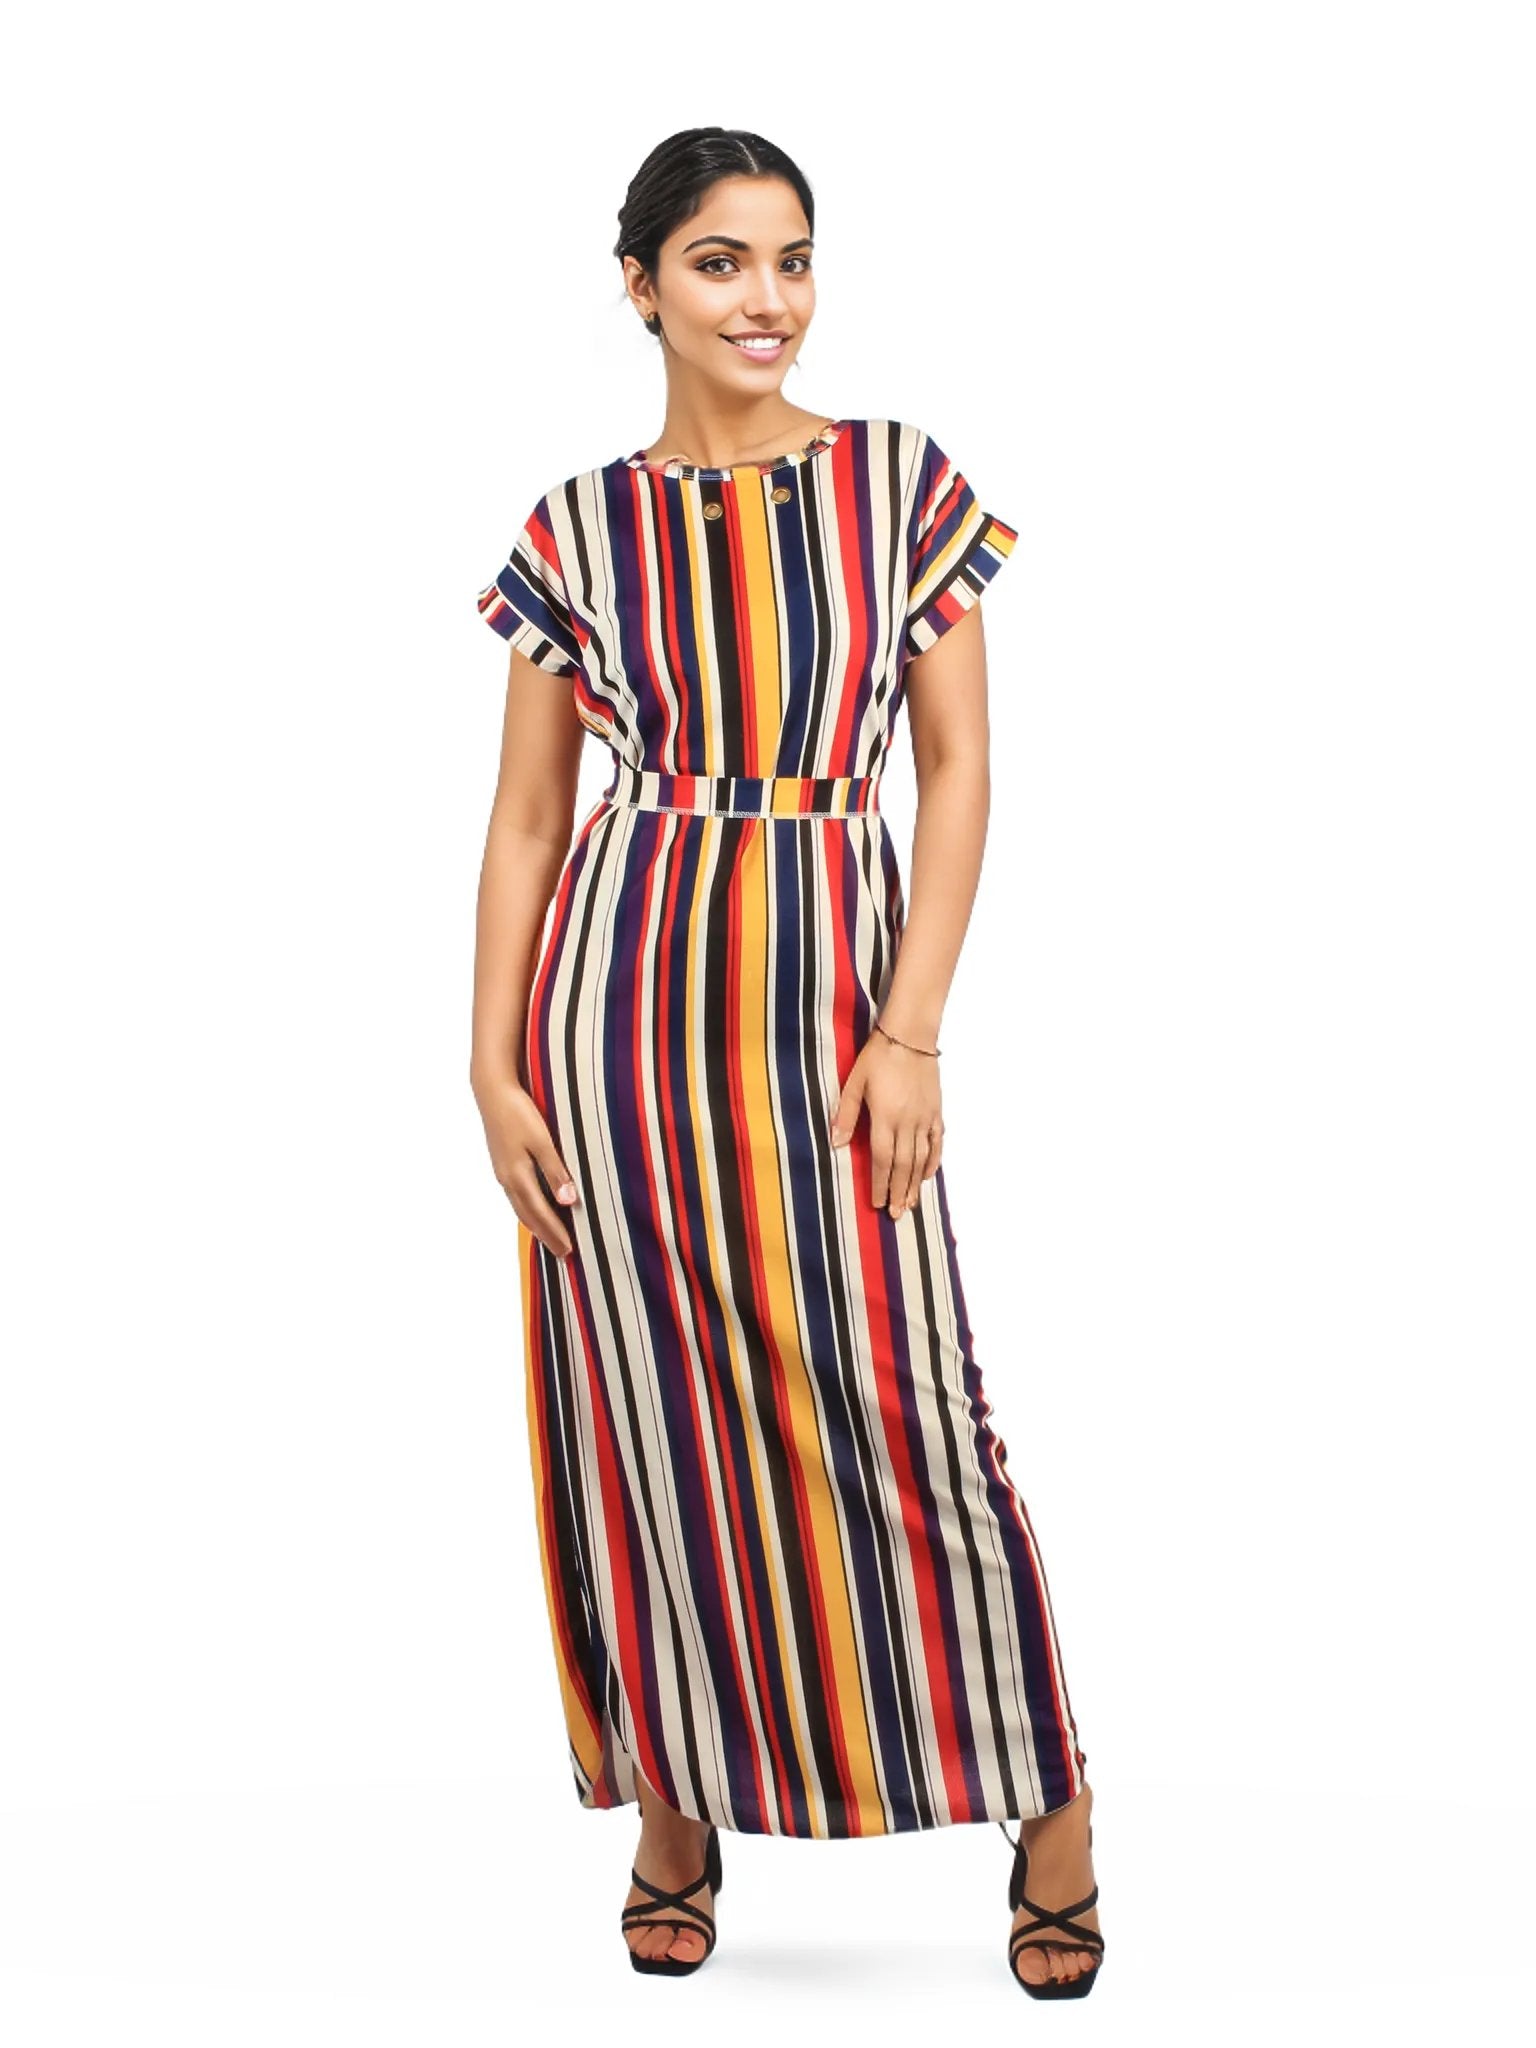 Striped Maxi Dress With Belt